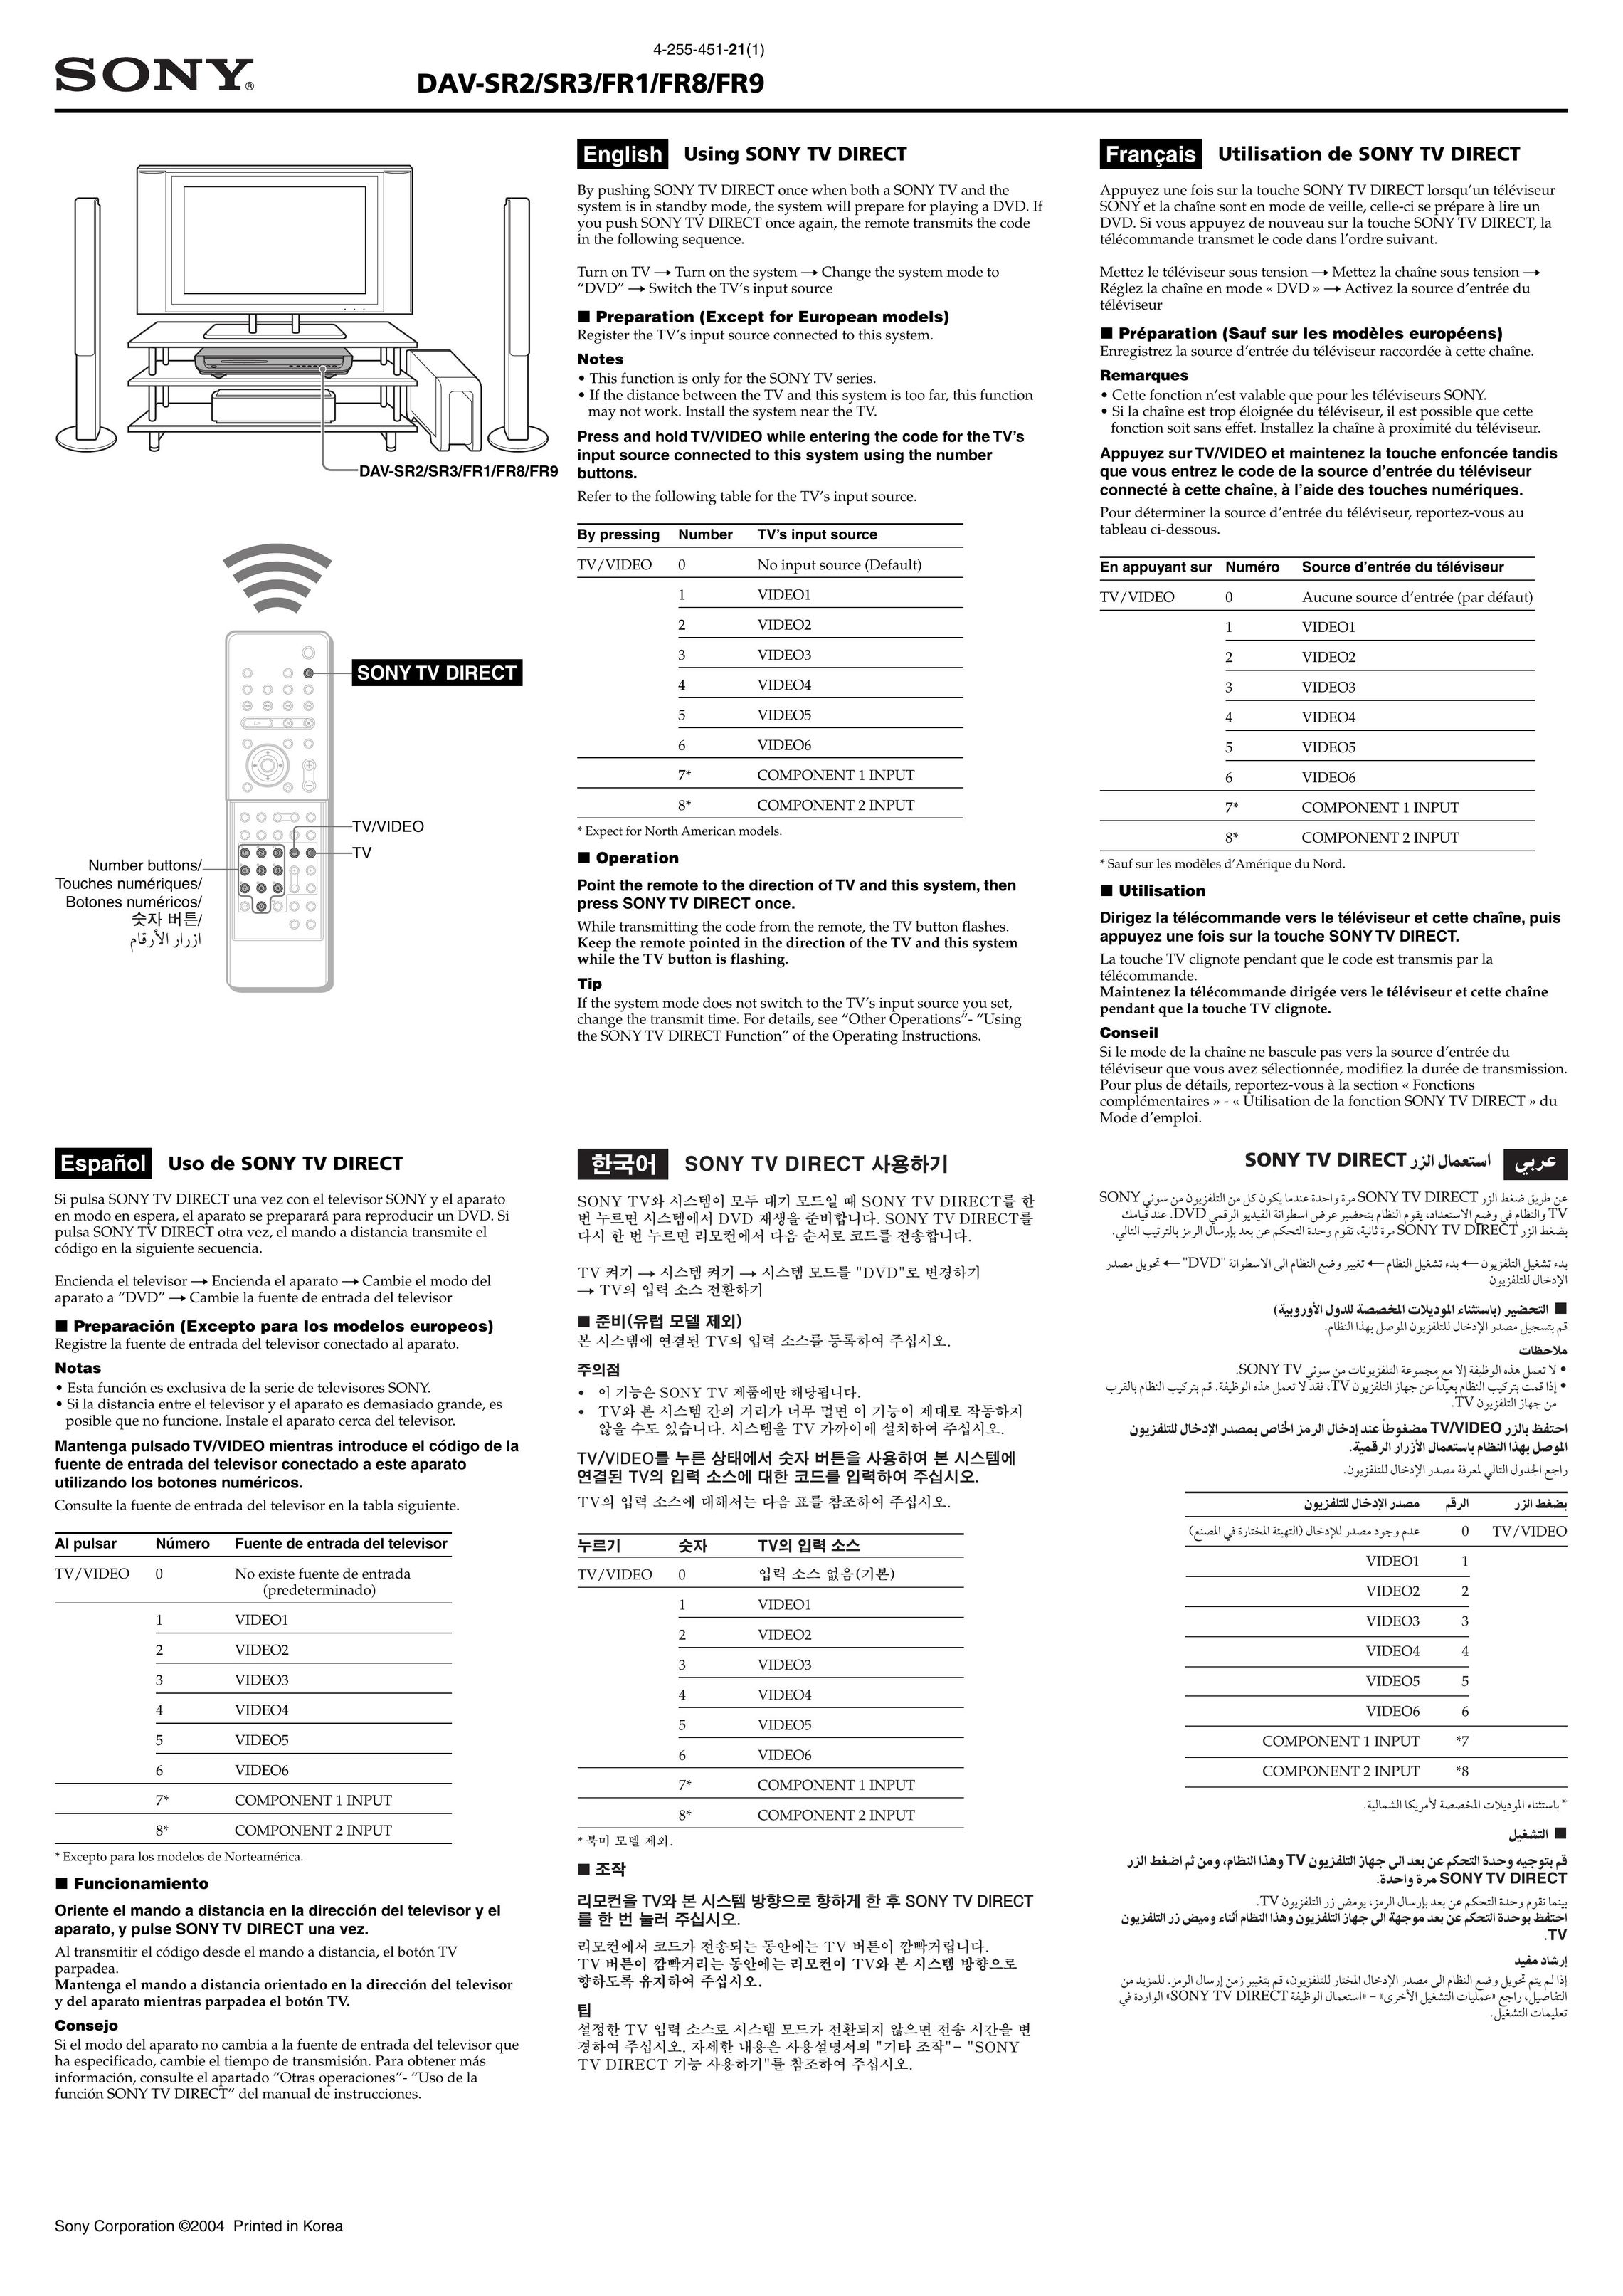 Sony DAV-SR2 Universal Remote User Manual